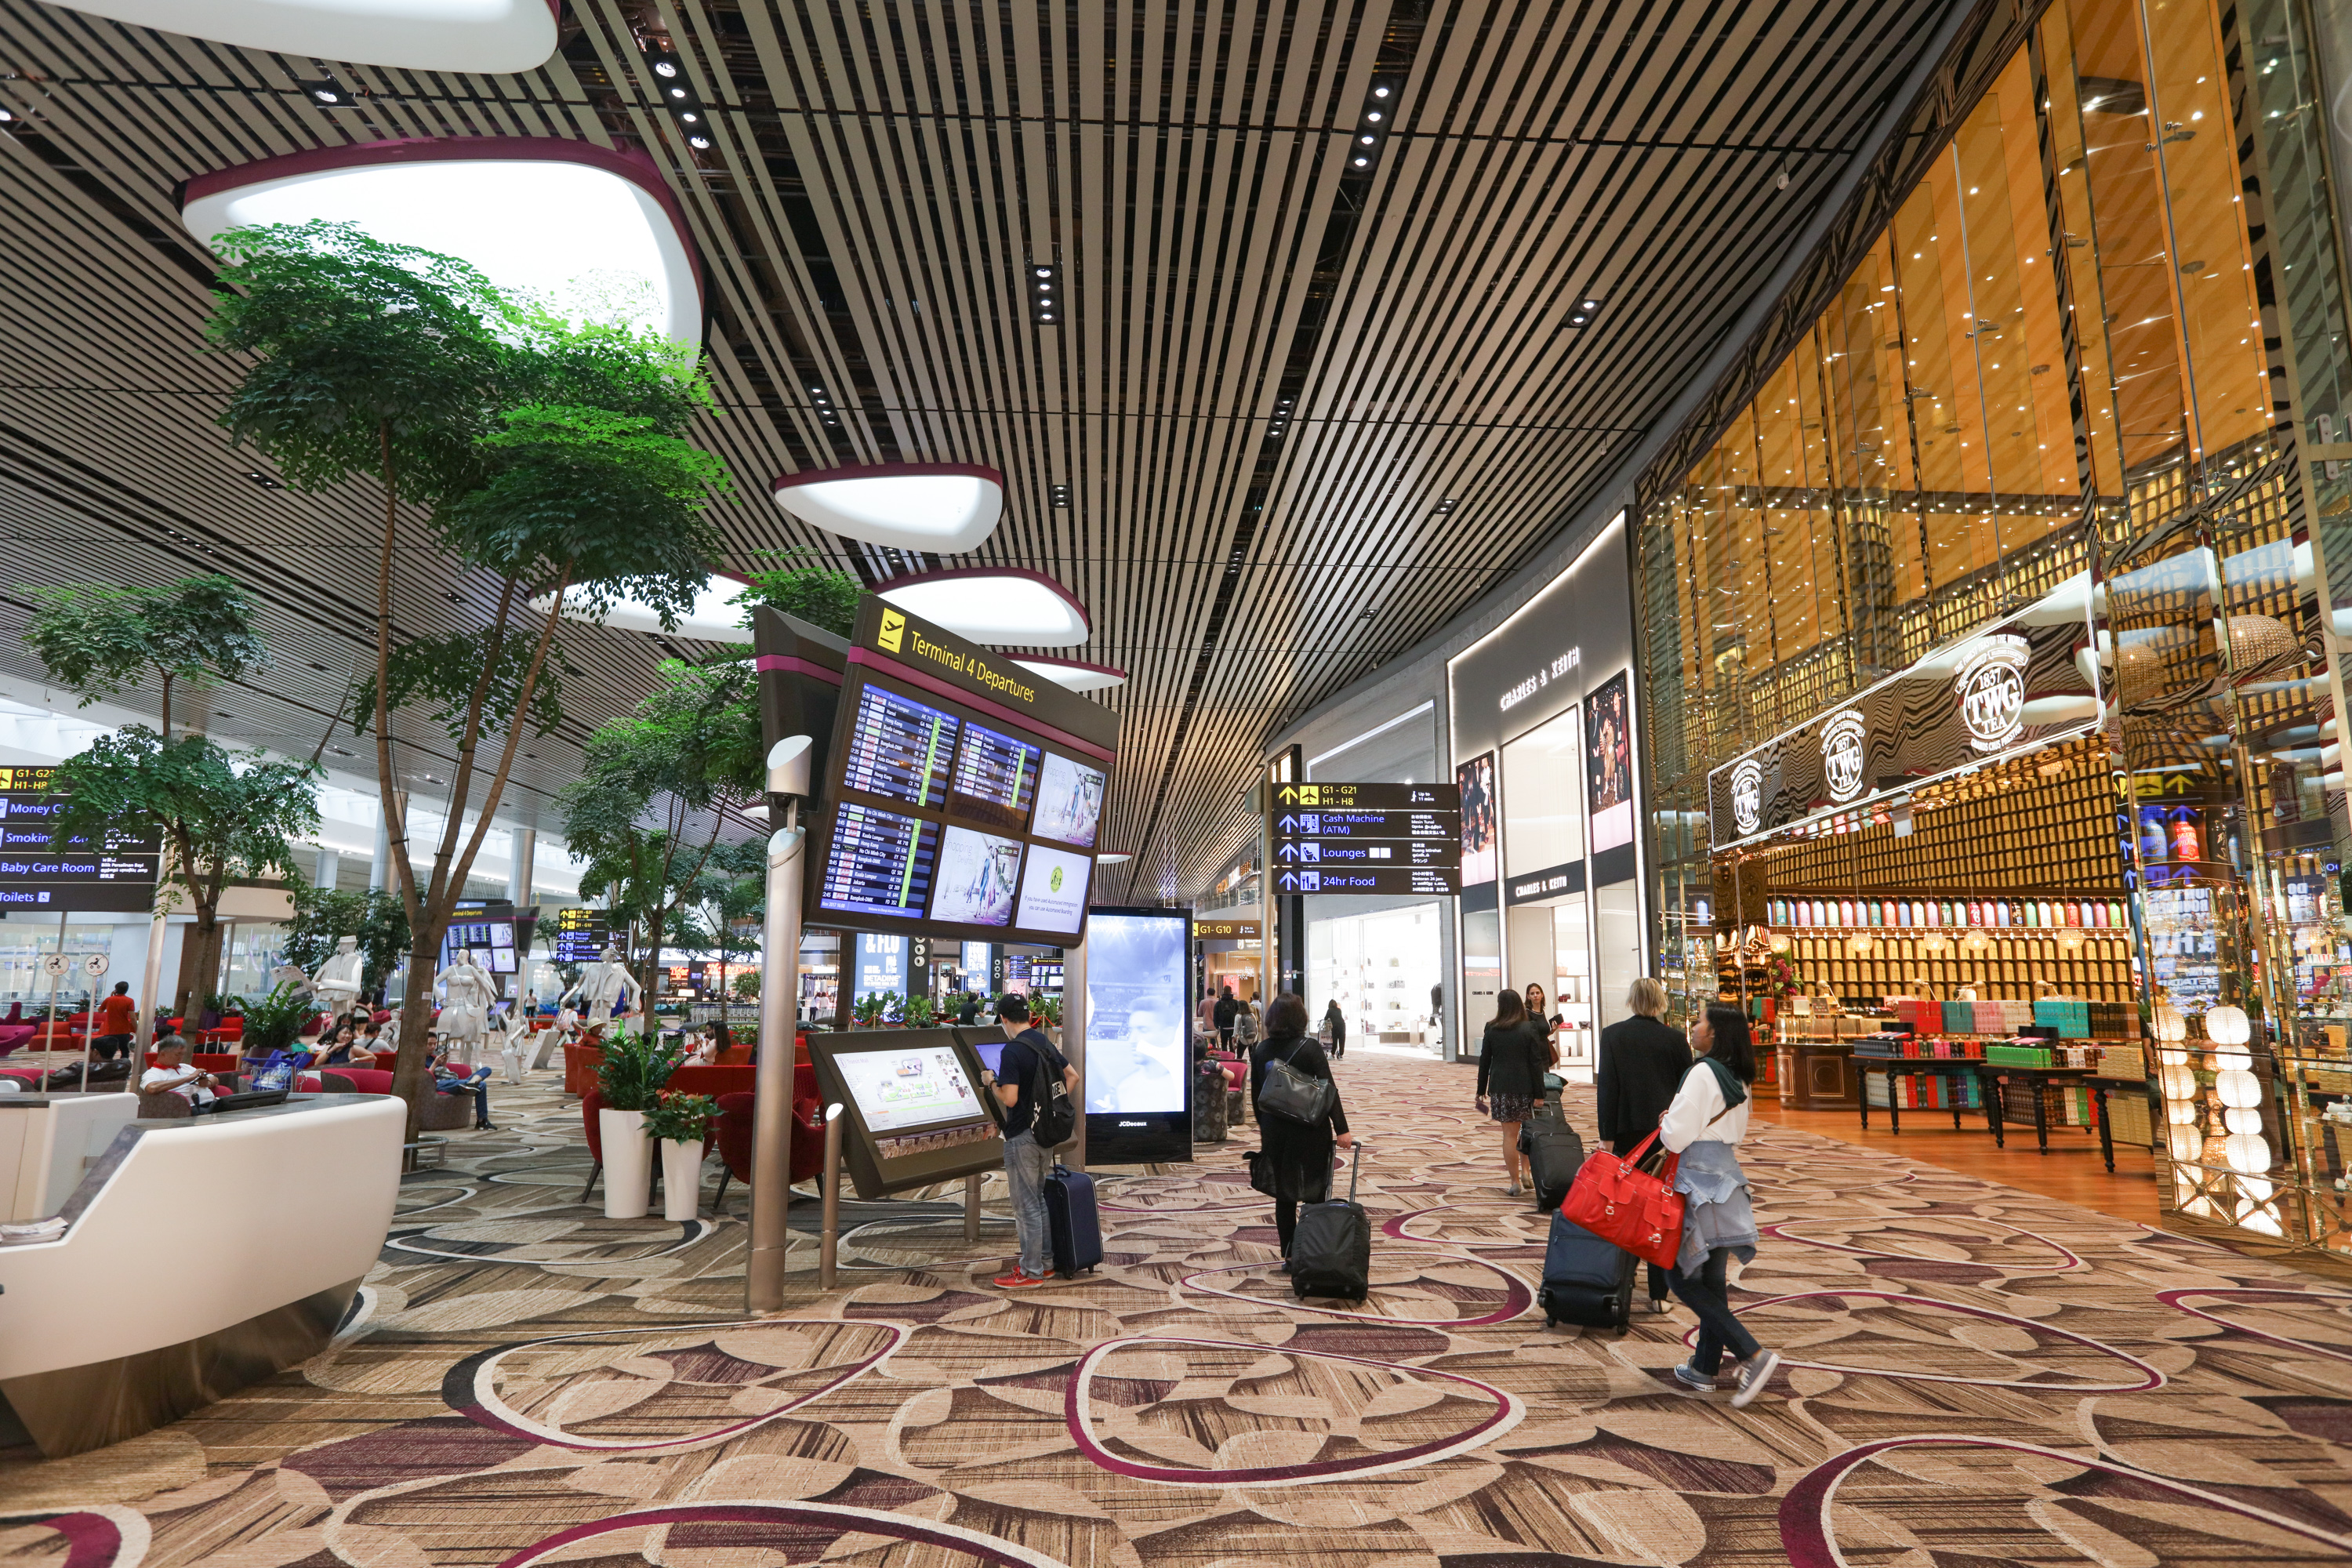 Terminal 4 of Changi Airport in Singapore